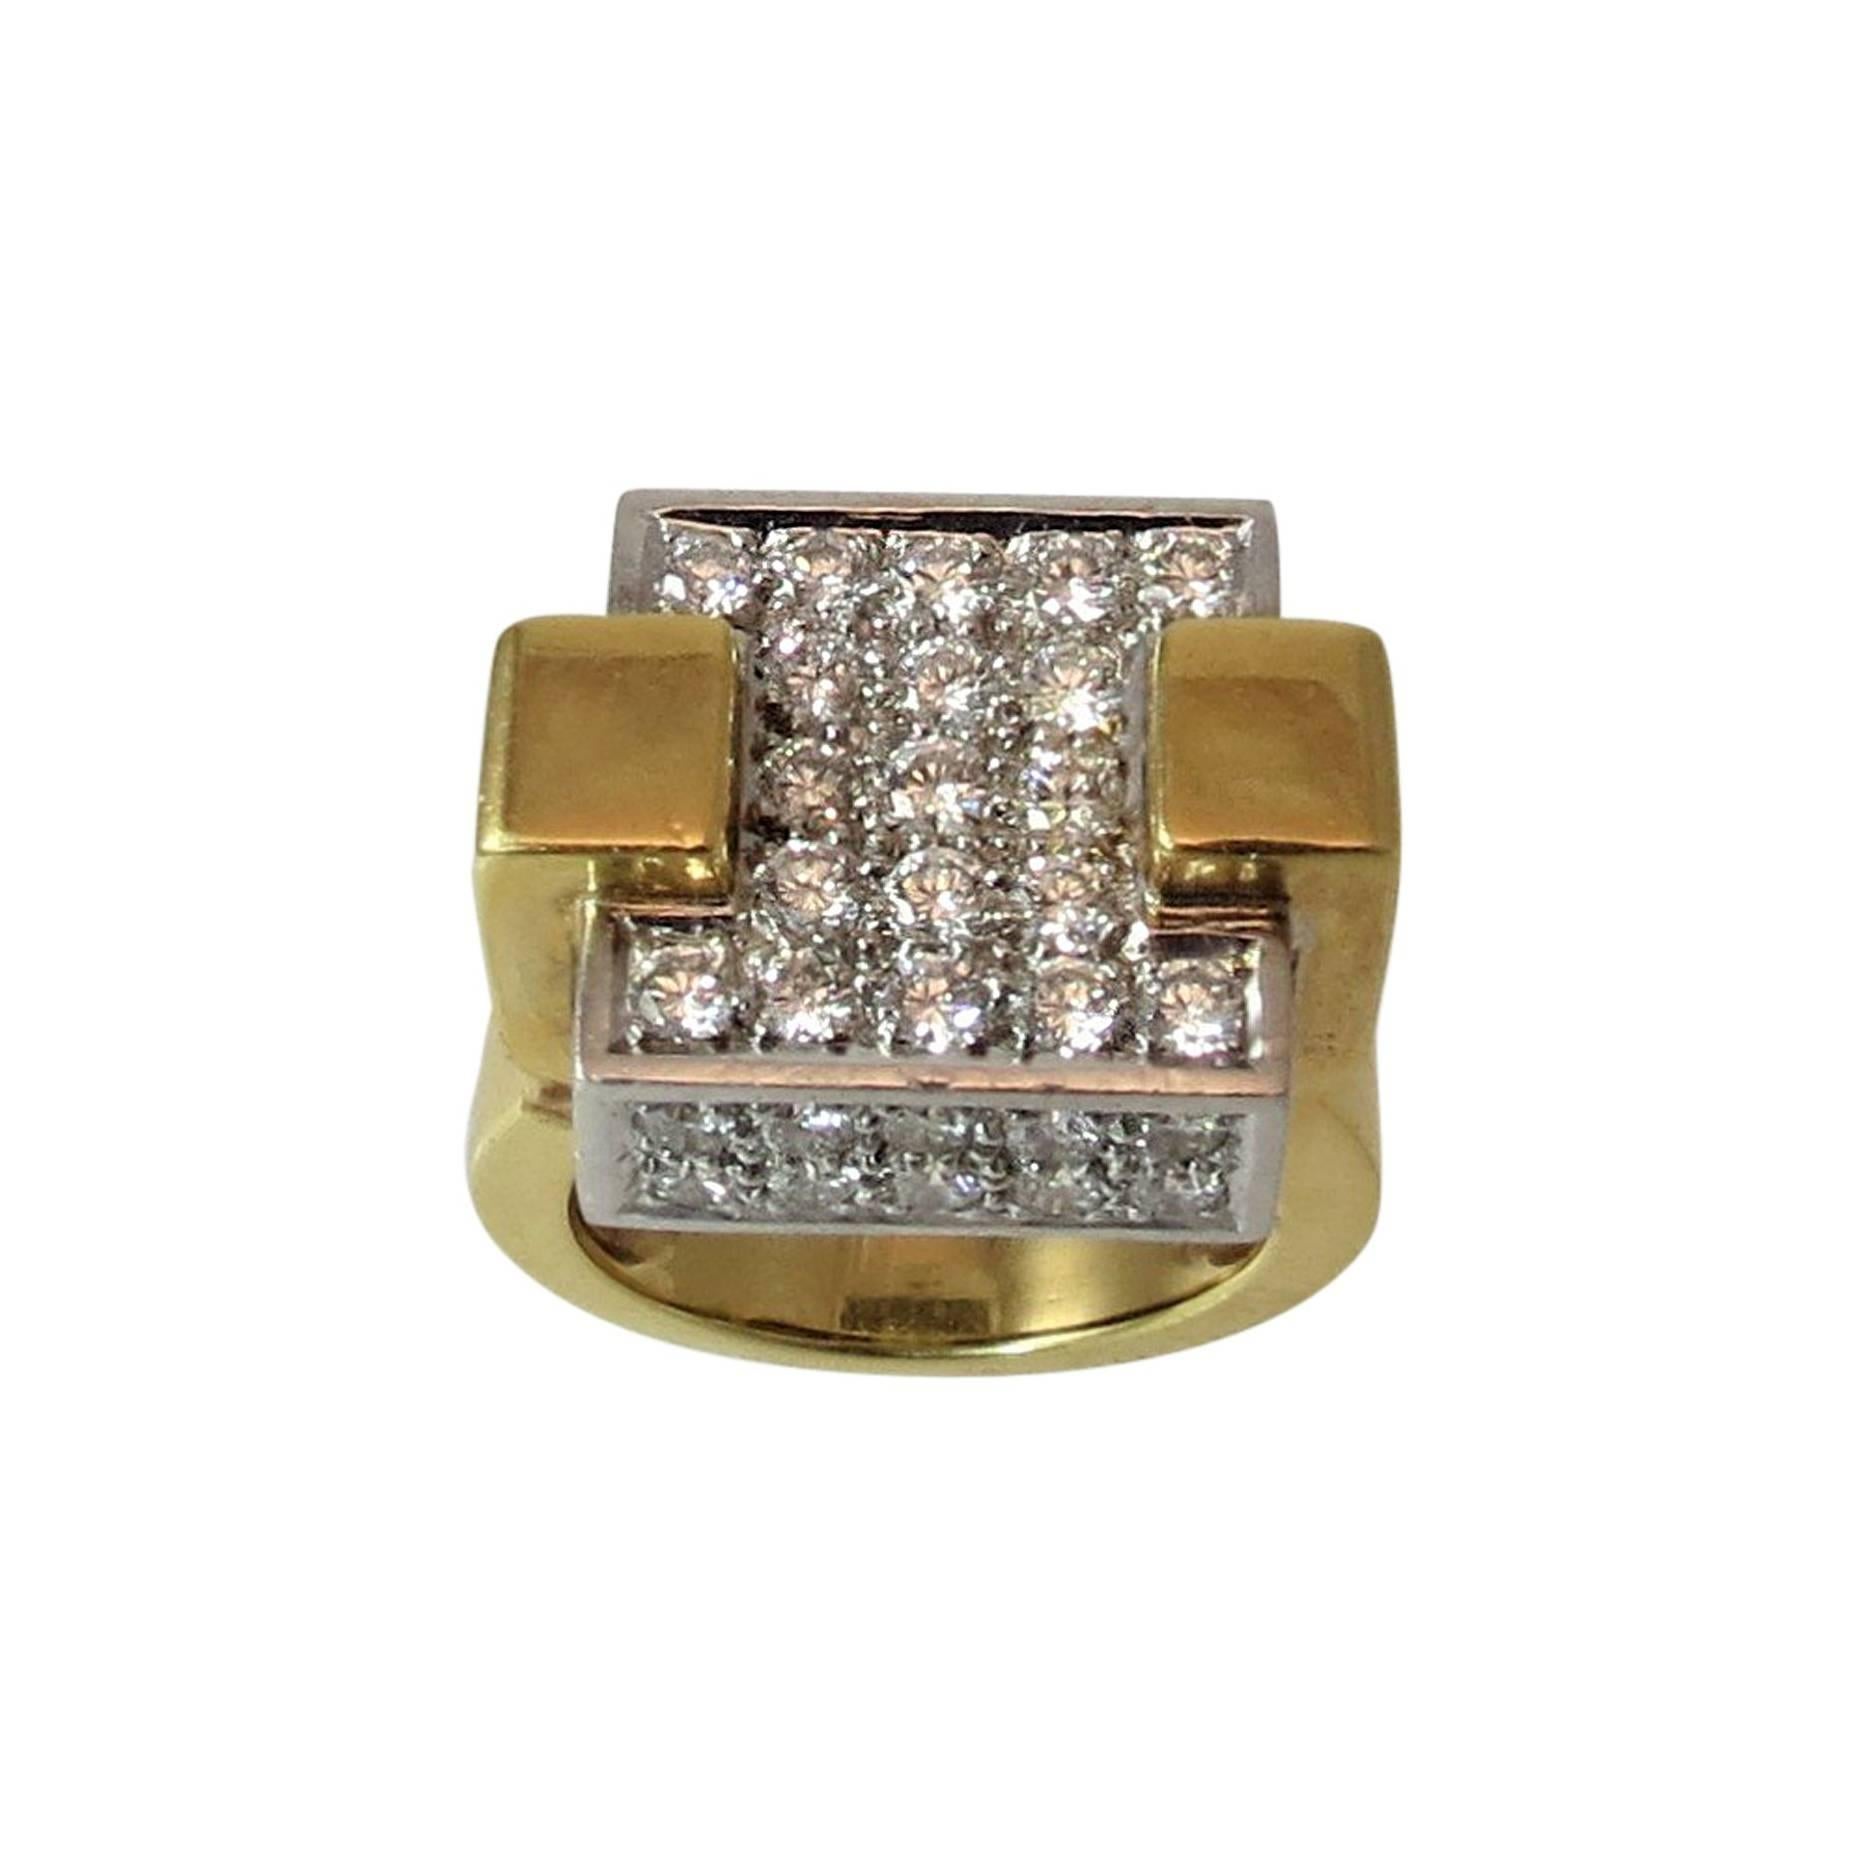 Dramatic 18 Karat Yellow Gold and Platinum Pave Diamond Square Design Ring